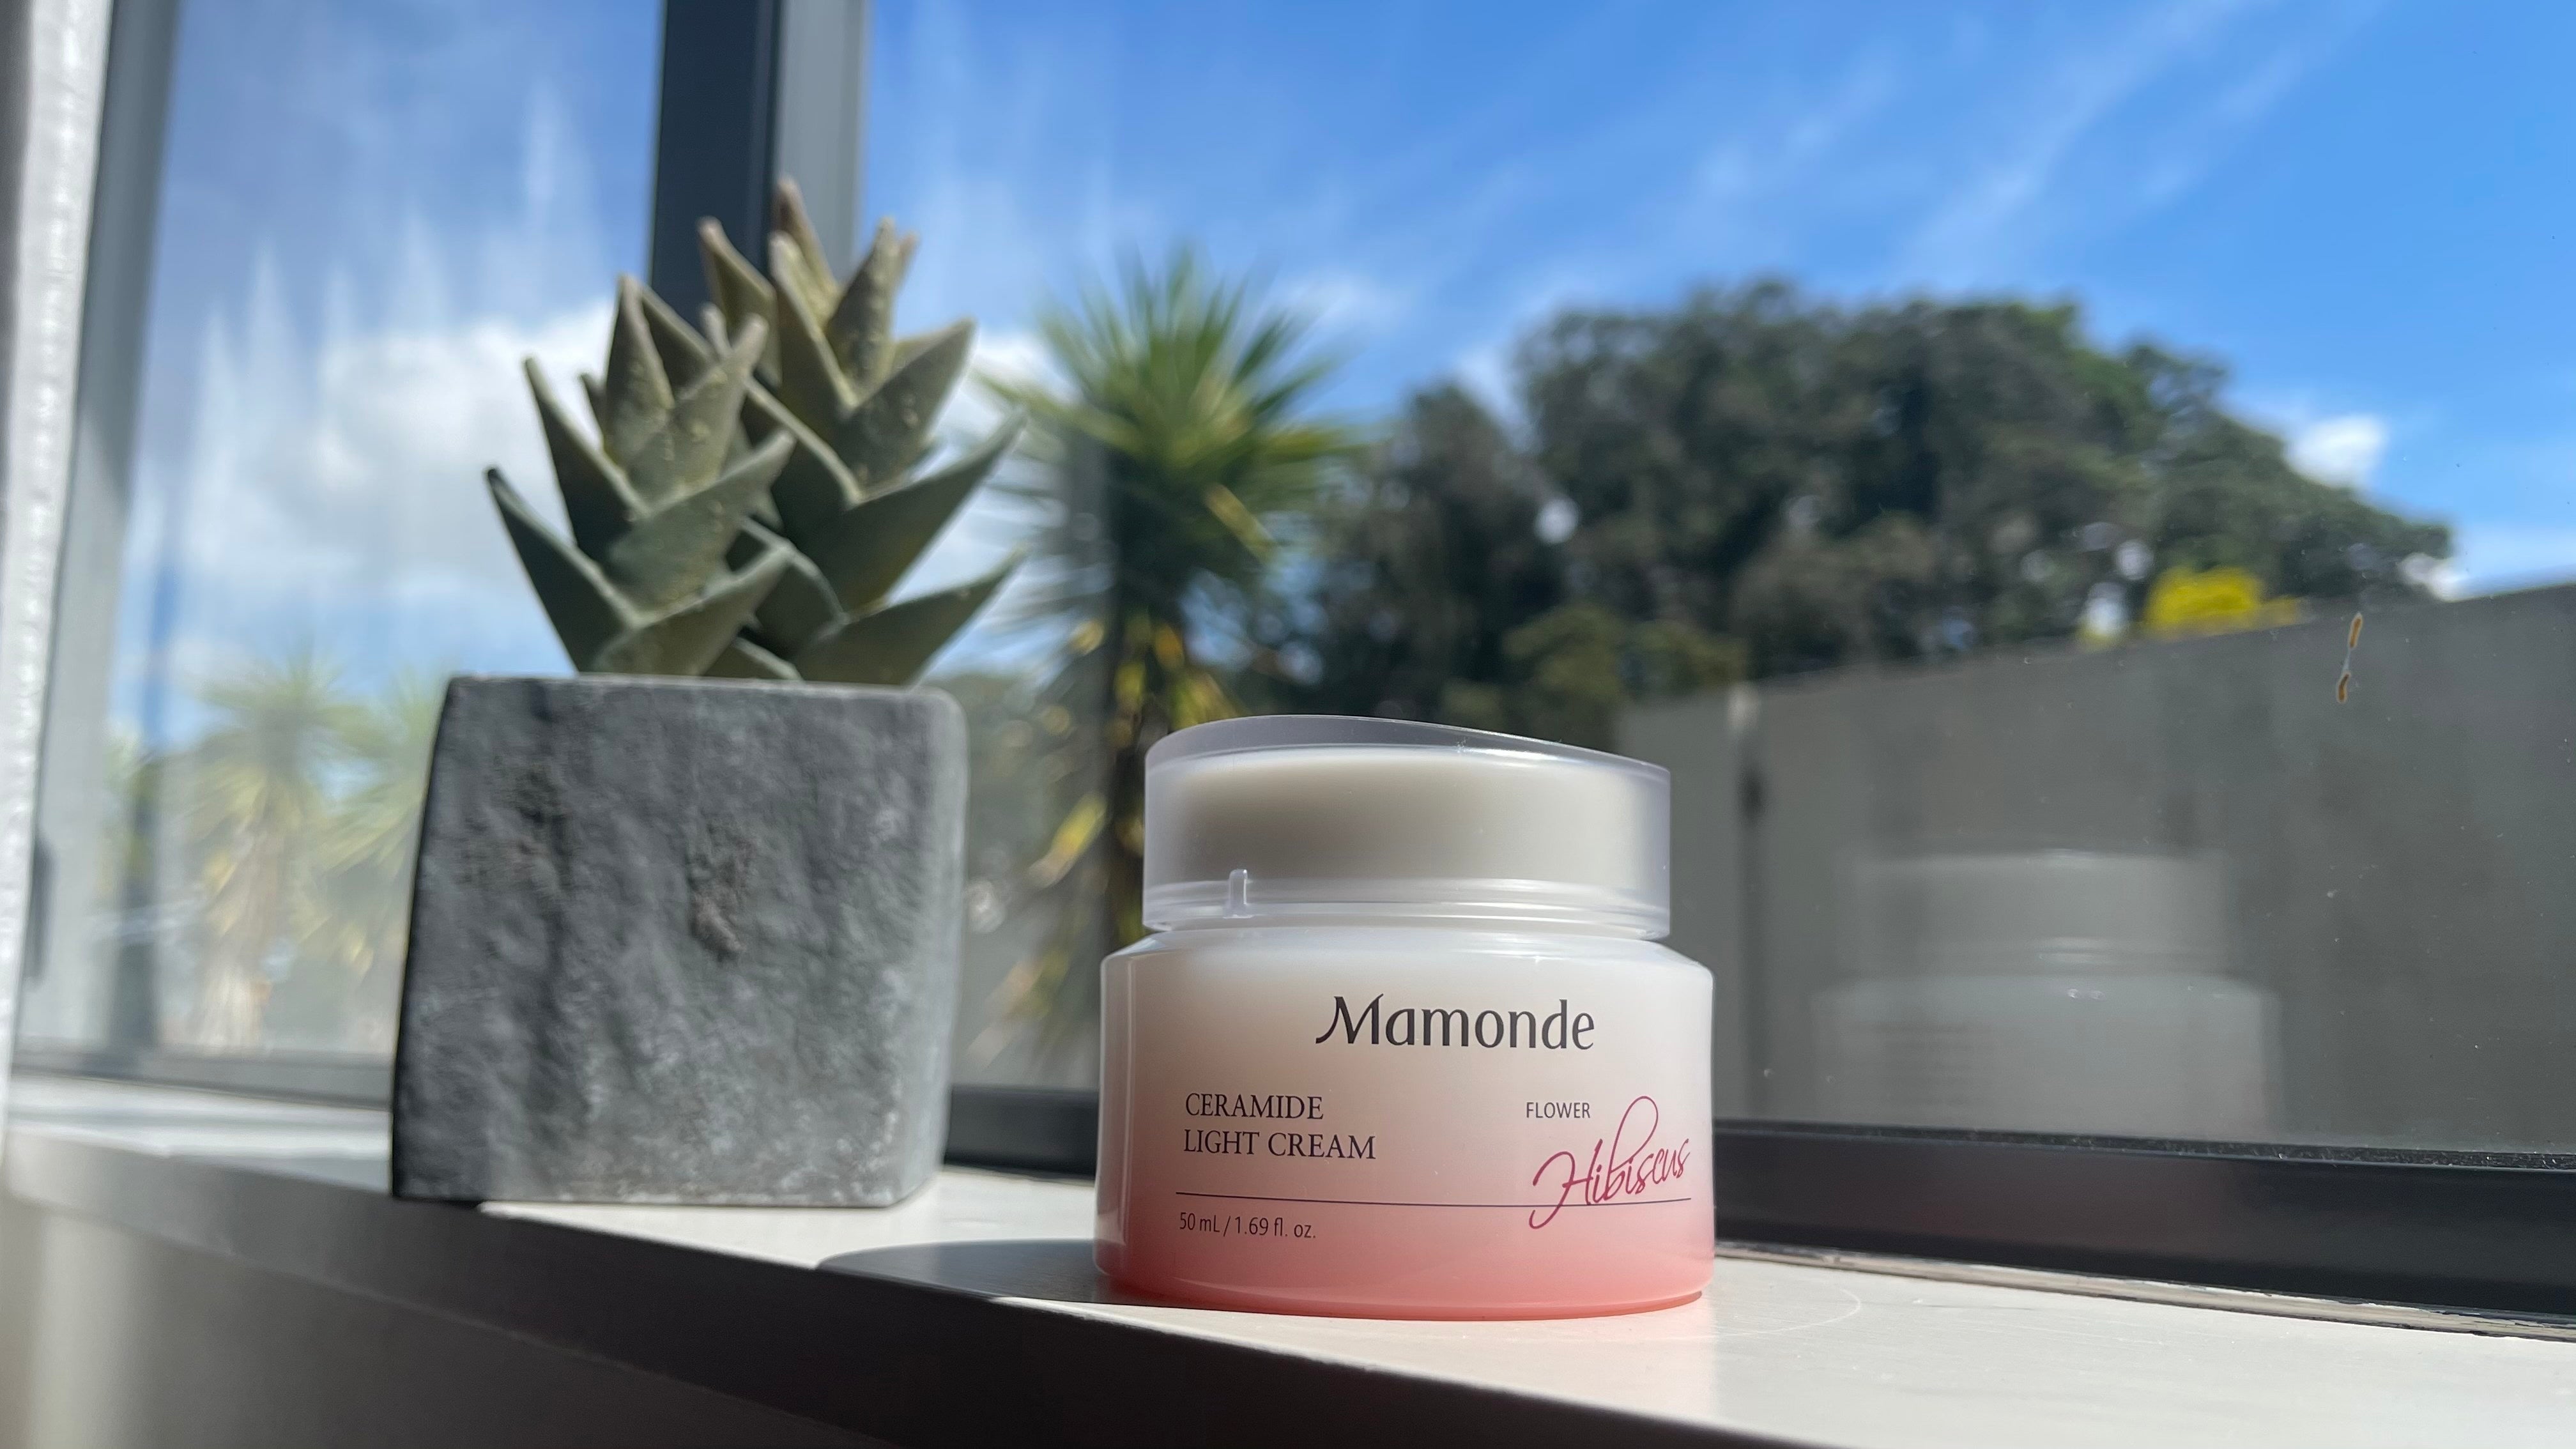 HI-REVIEW: Mamonde Ceramide Light Cream 🌸